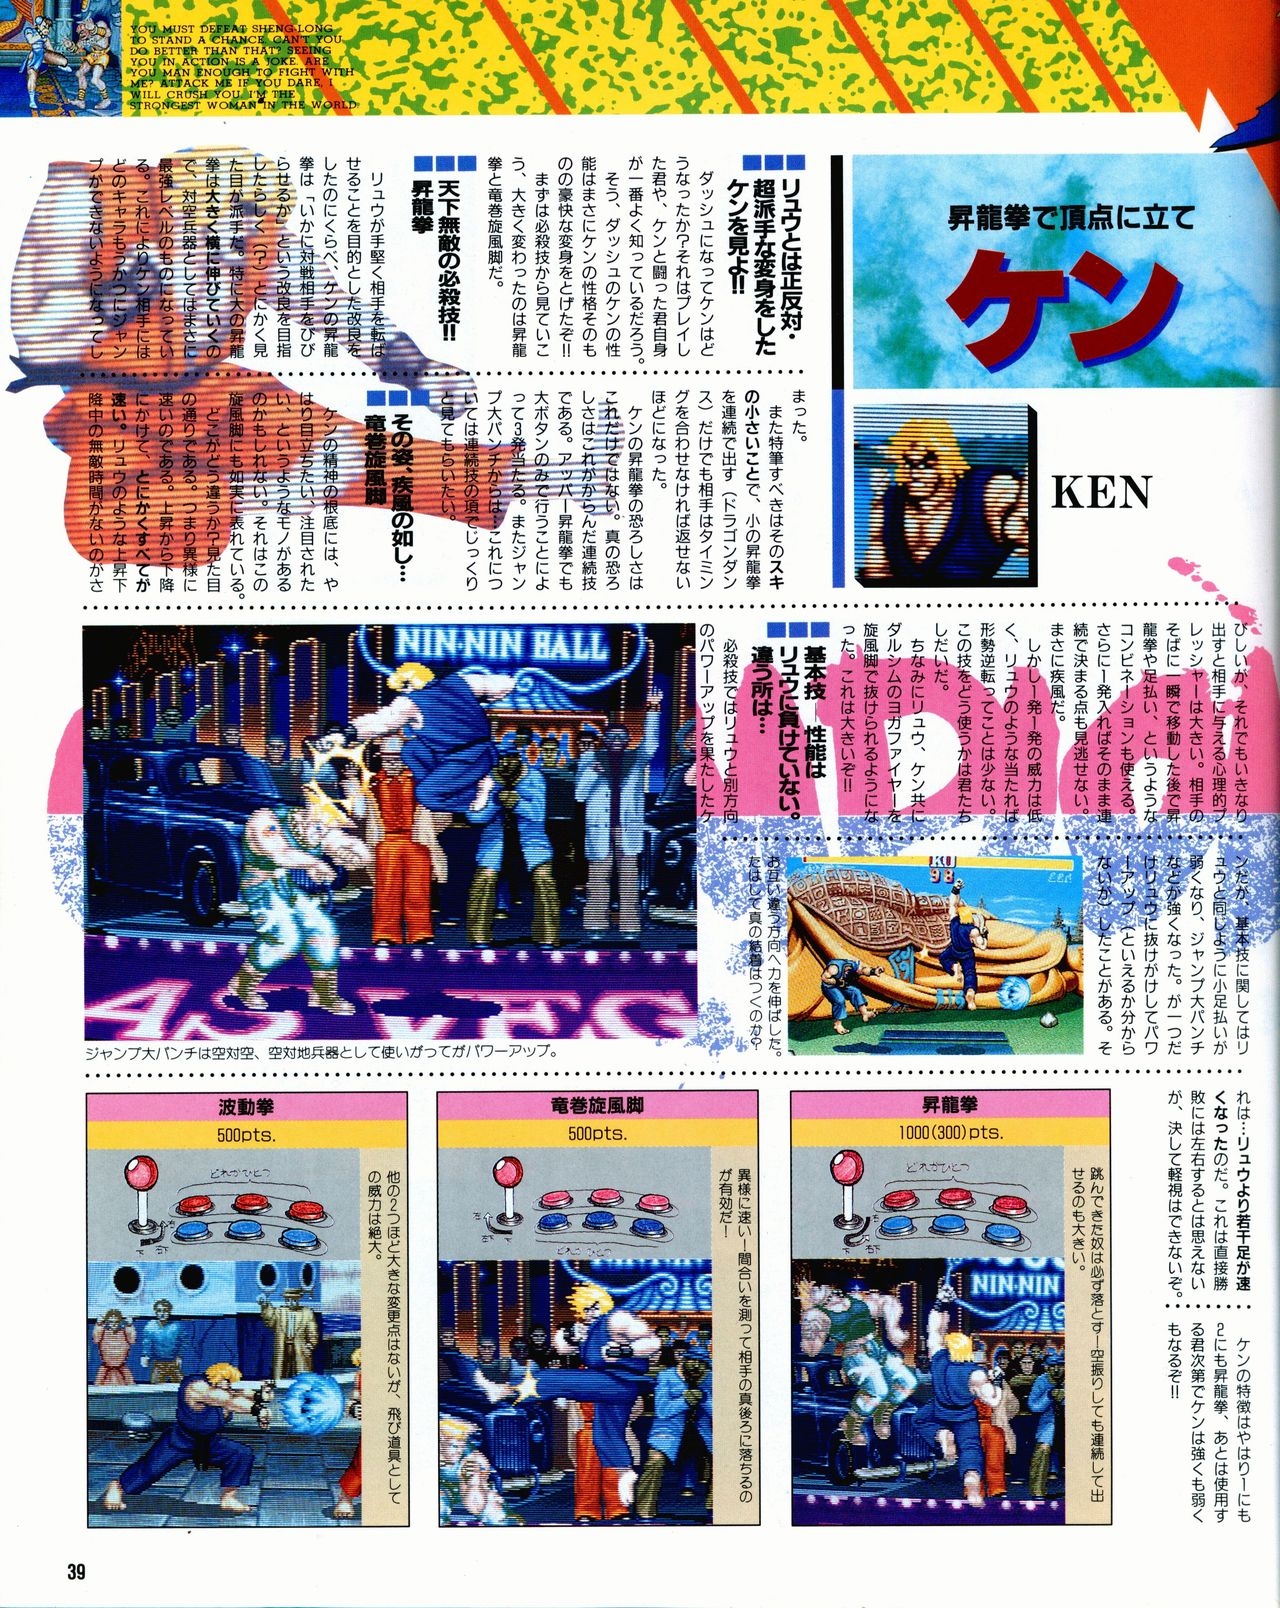 Street Fighter II Dash - Gamest special issue 77 40